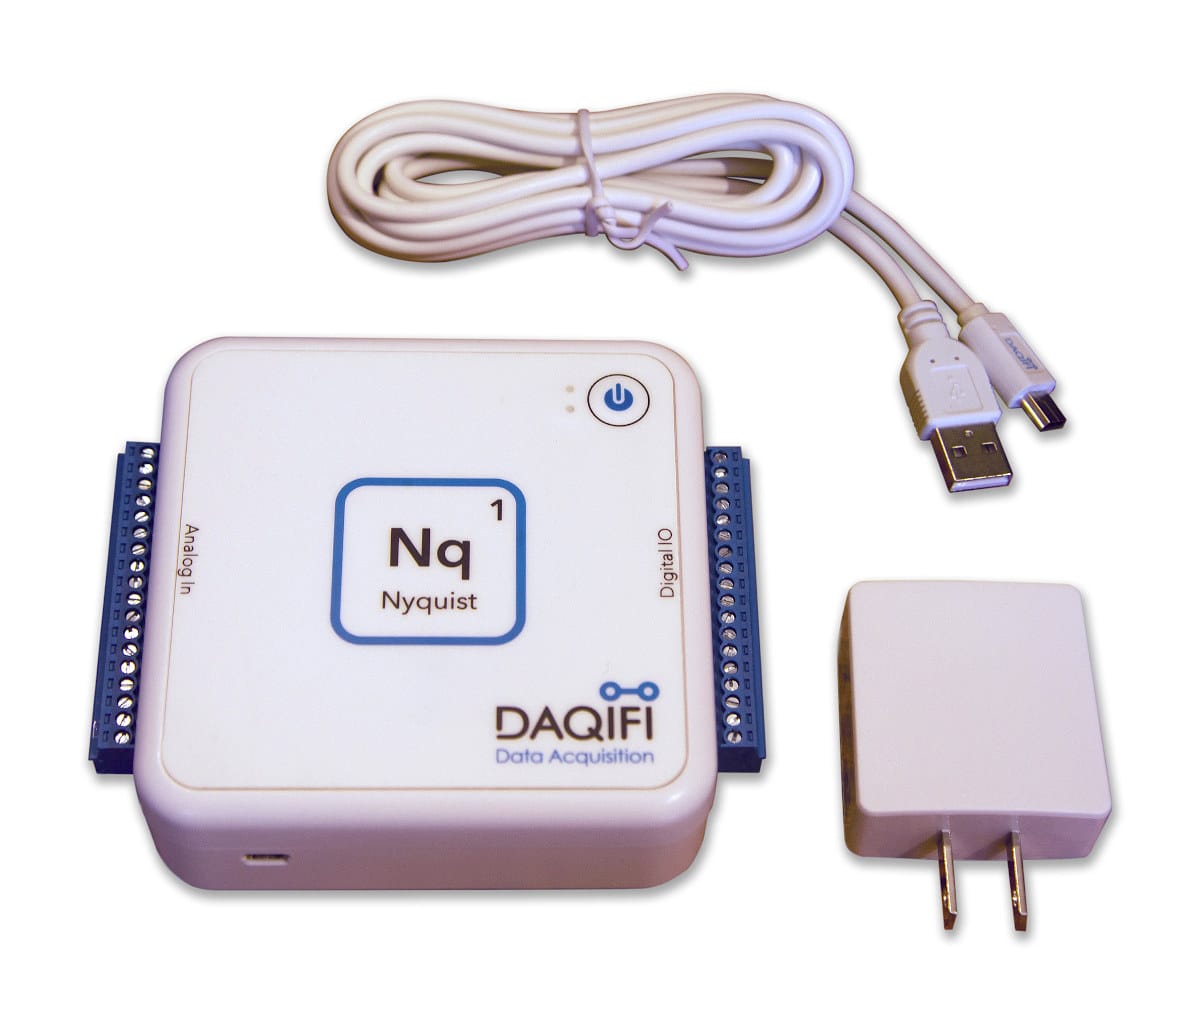 DAQiFi Nyquist 1 WiFi IoT data acquisition system